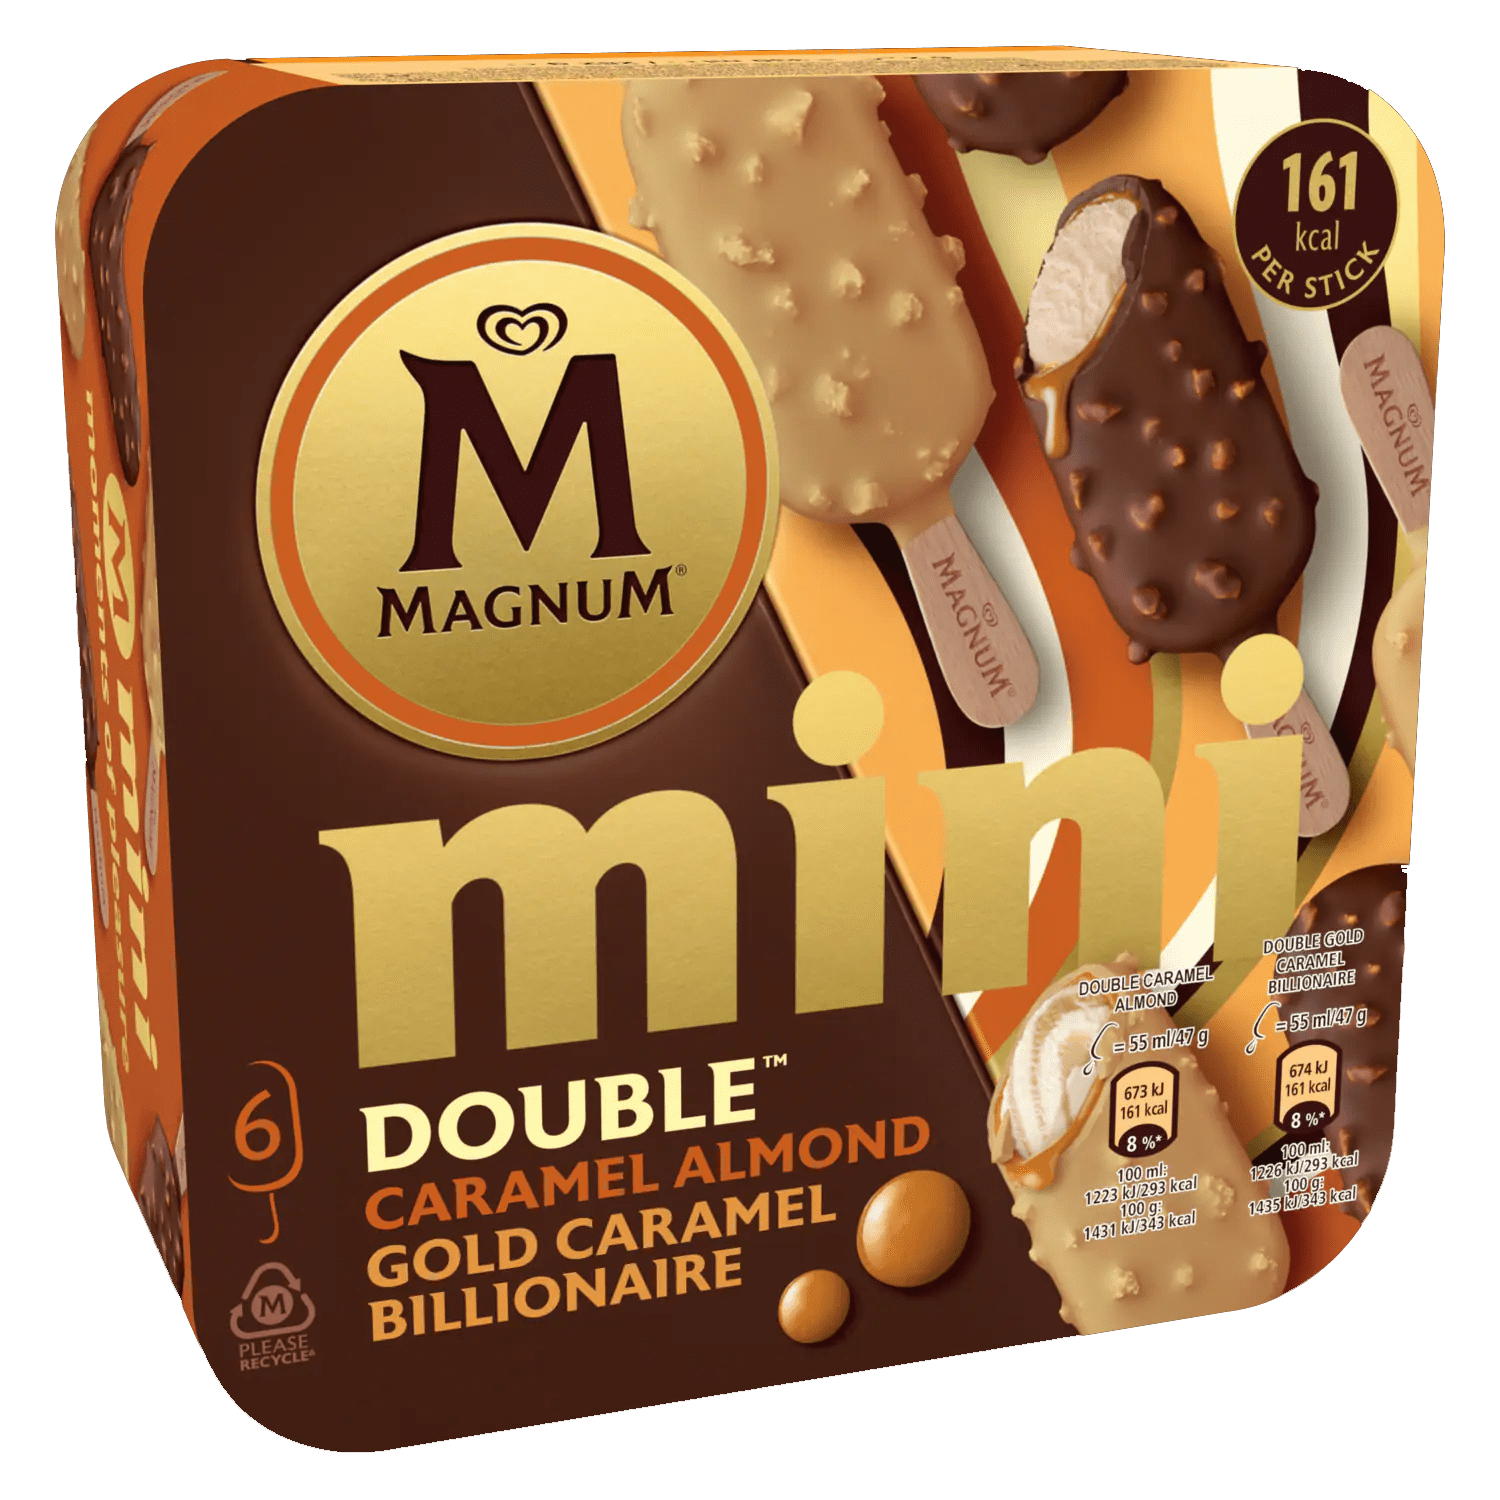 Magnum Mini Billion Almond Hpk 6 stk – 6 ein í pk